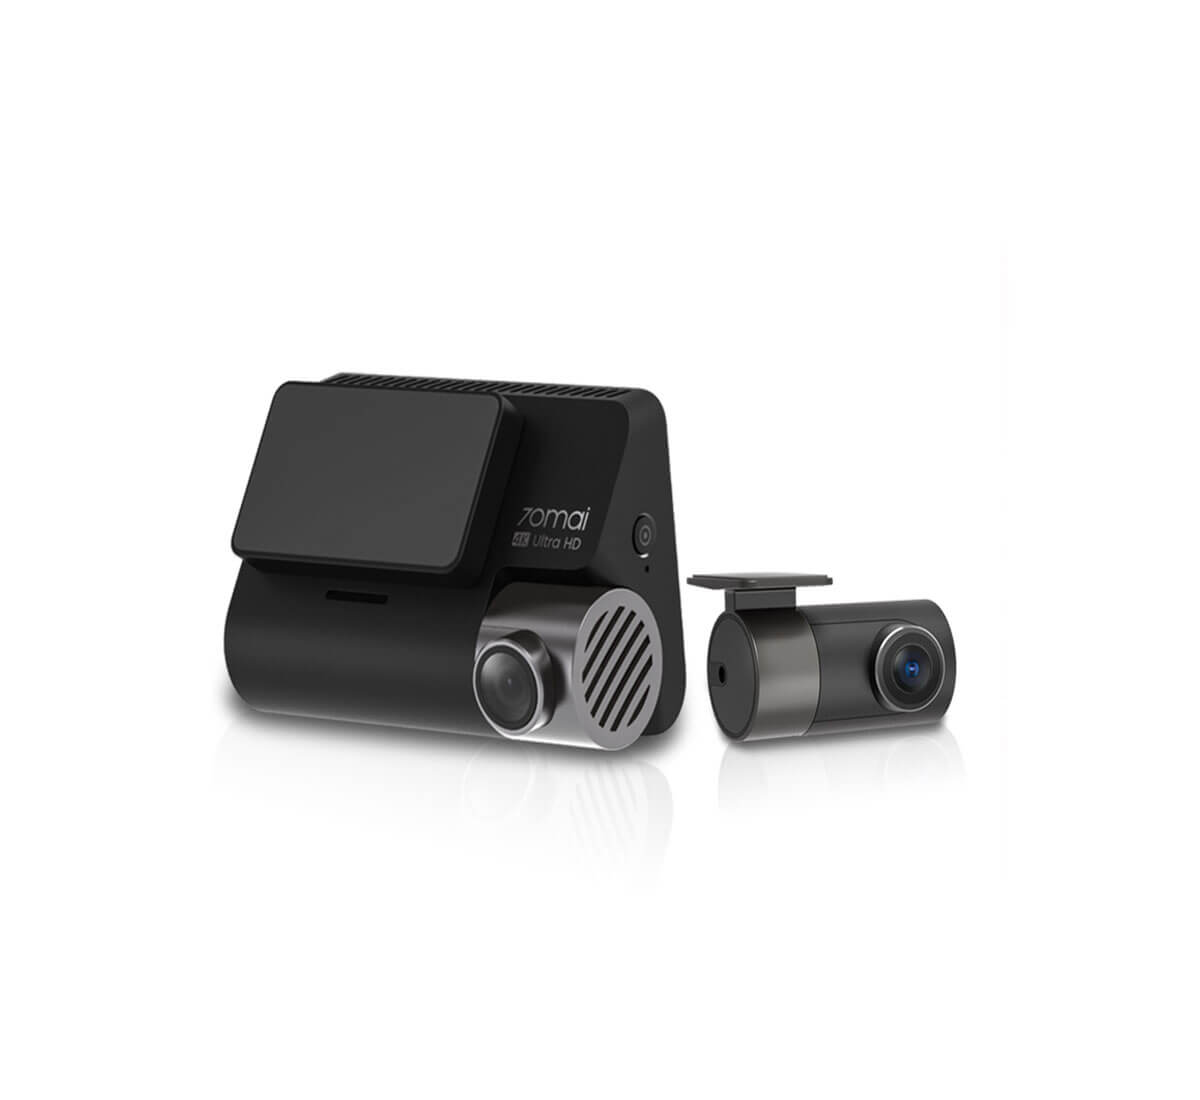 دوربین خودرو هوشمند شیائومی 70mai Dash Cam 4K A800s-1 (به همراه دوربین عقب)